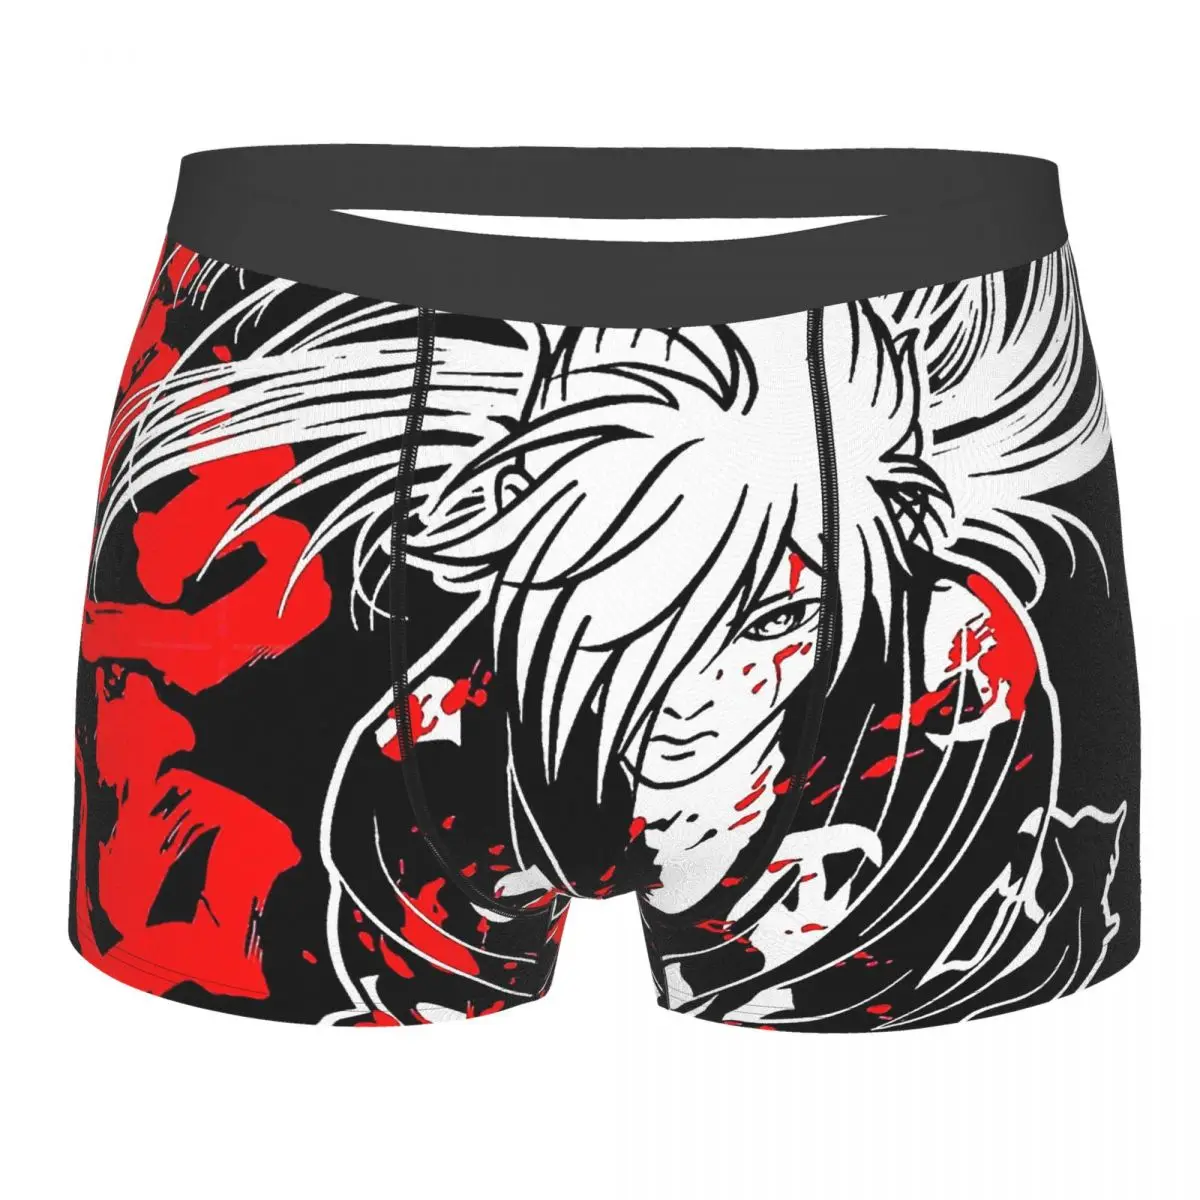 

Dororo Fantasy Action Animation TV Series Samurai Monster Underpants Cotton Panties Men's Underwear Sexy Shorts Boxer Briefs